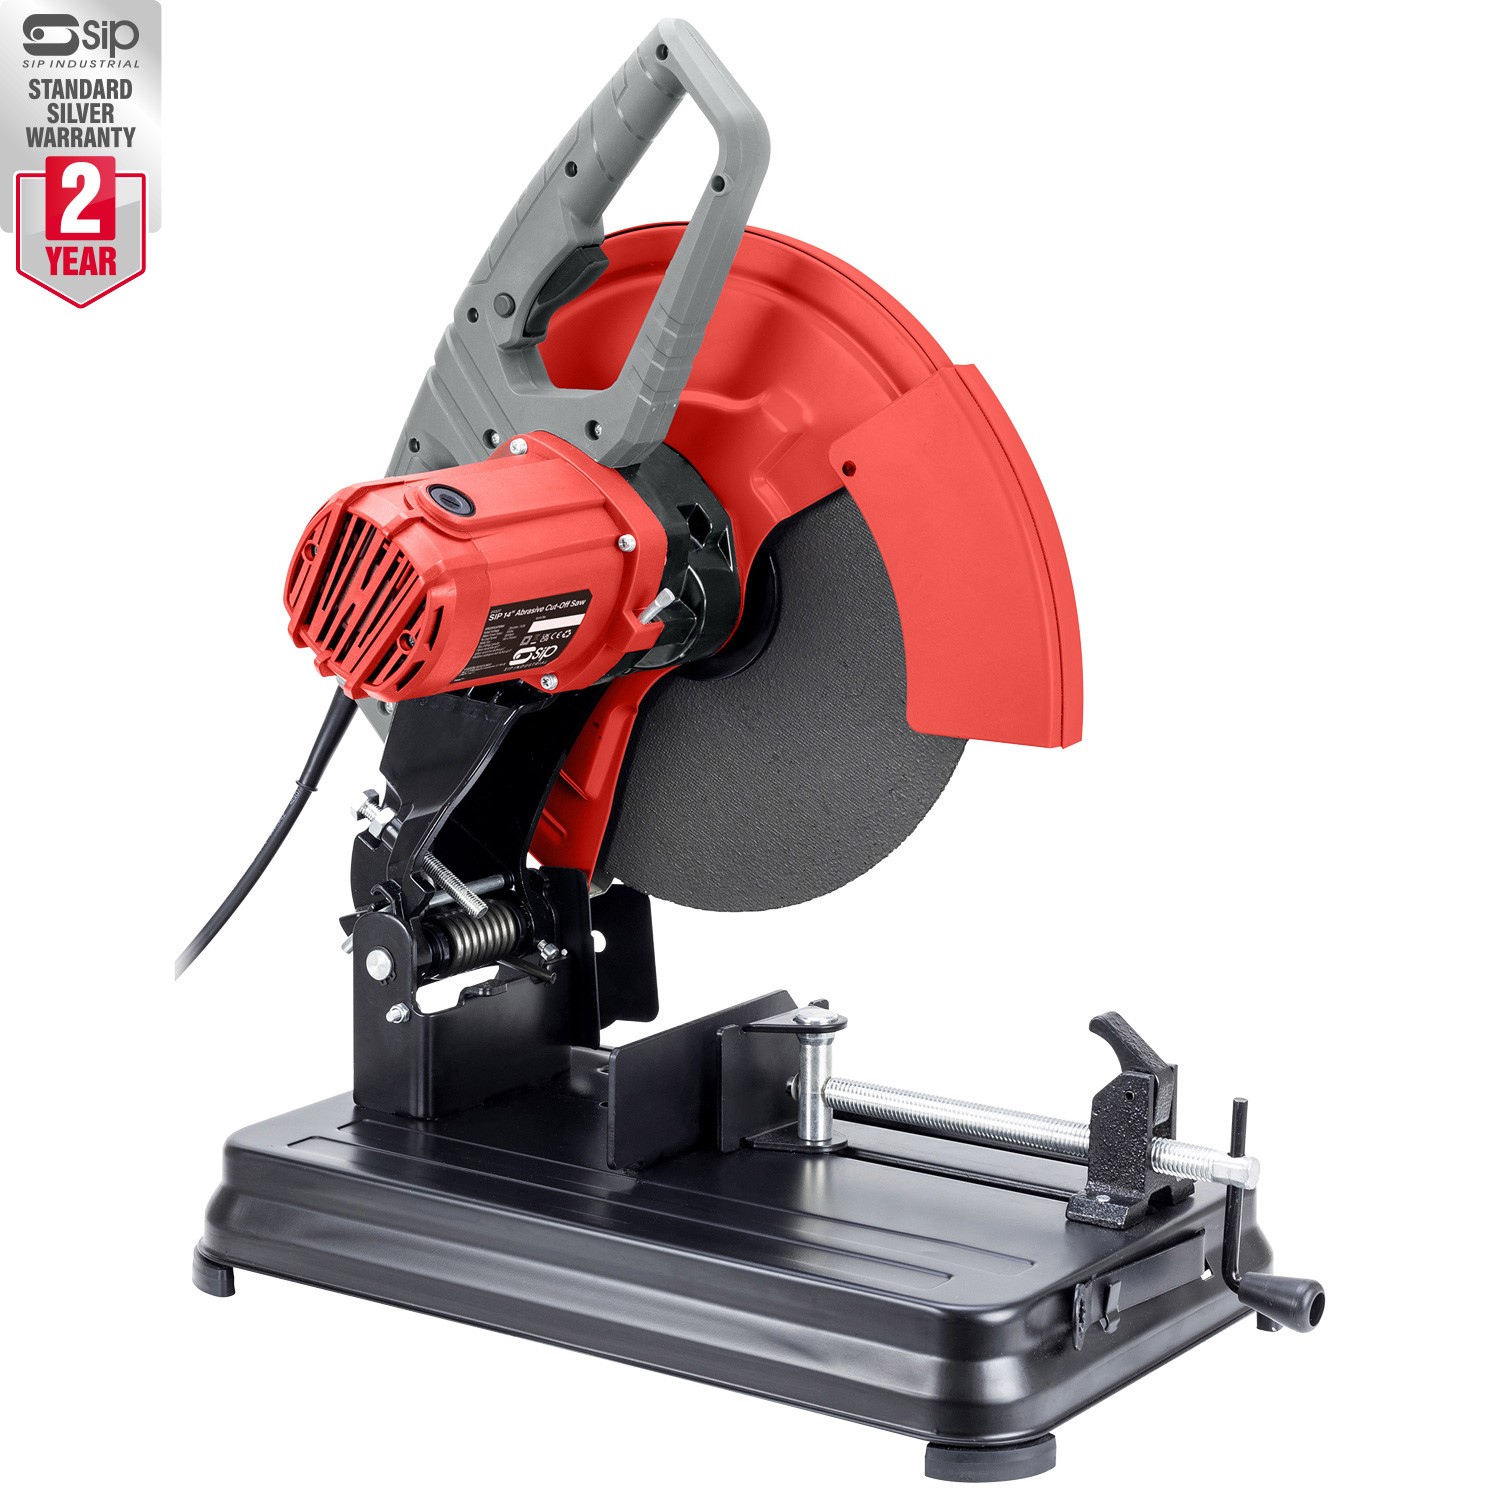 SIP 14 Abrasive Cut-Off Saw - SIP Machinery Europe Ltd Official Website